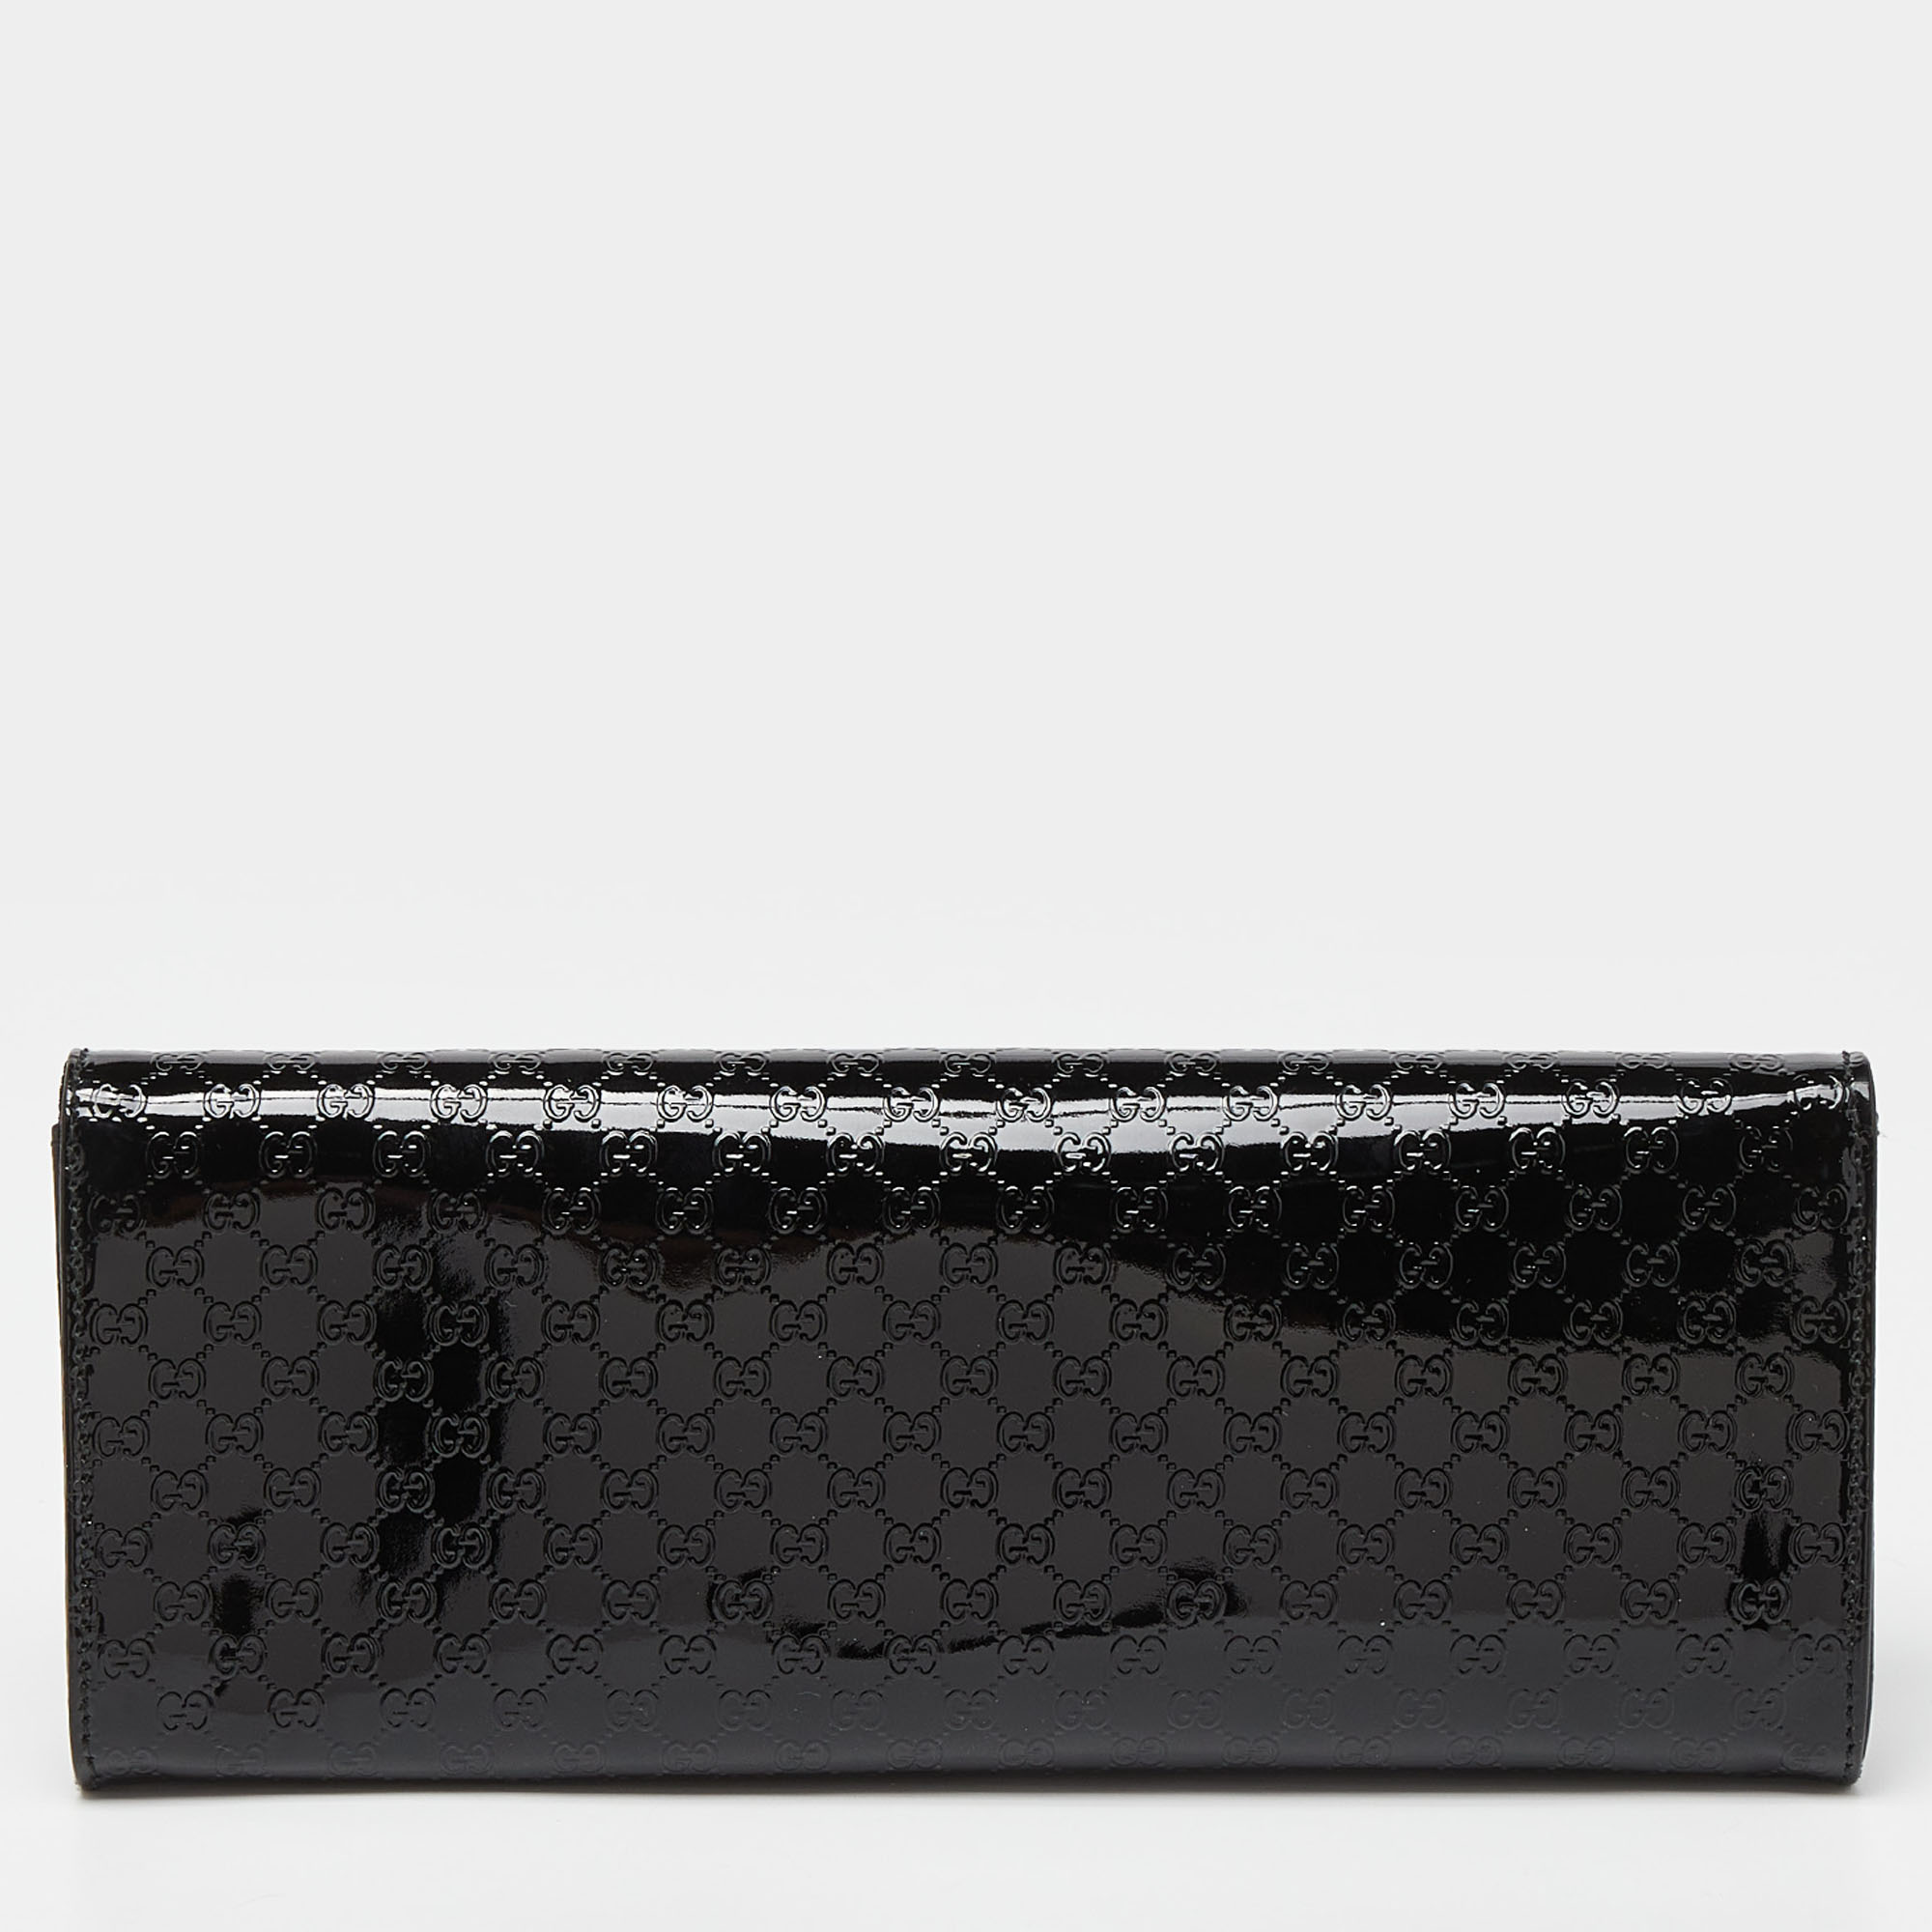 Gucci Black Microguccissima Patent Leather Small Broadway Clutch